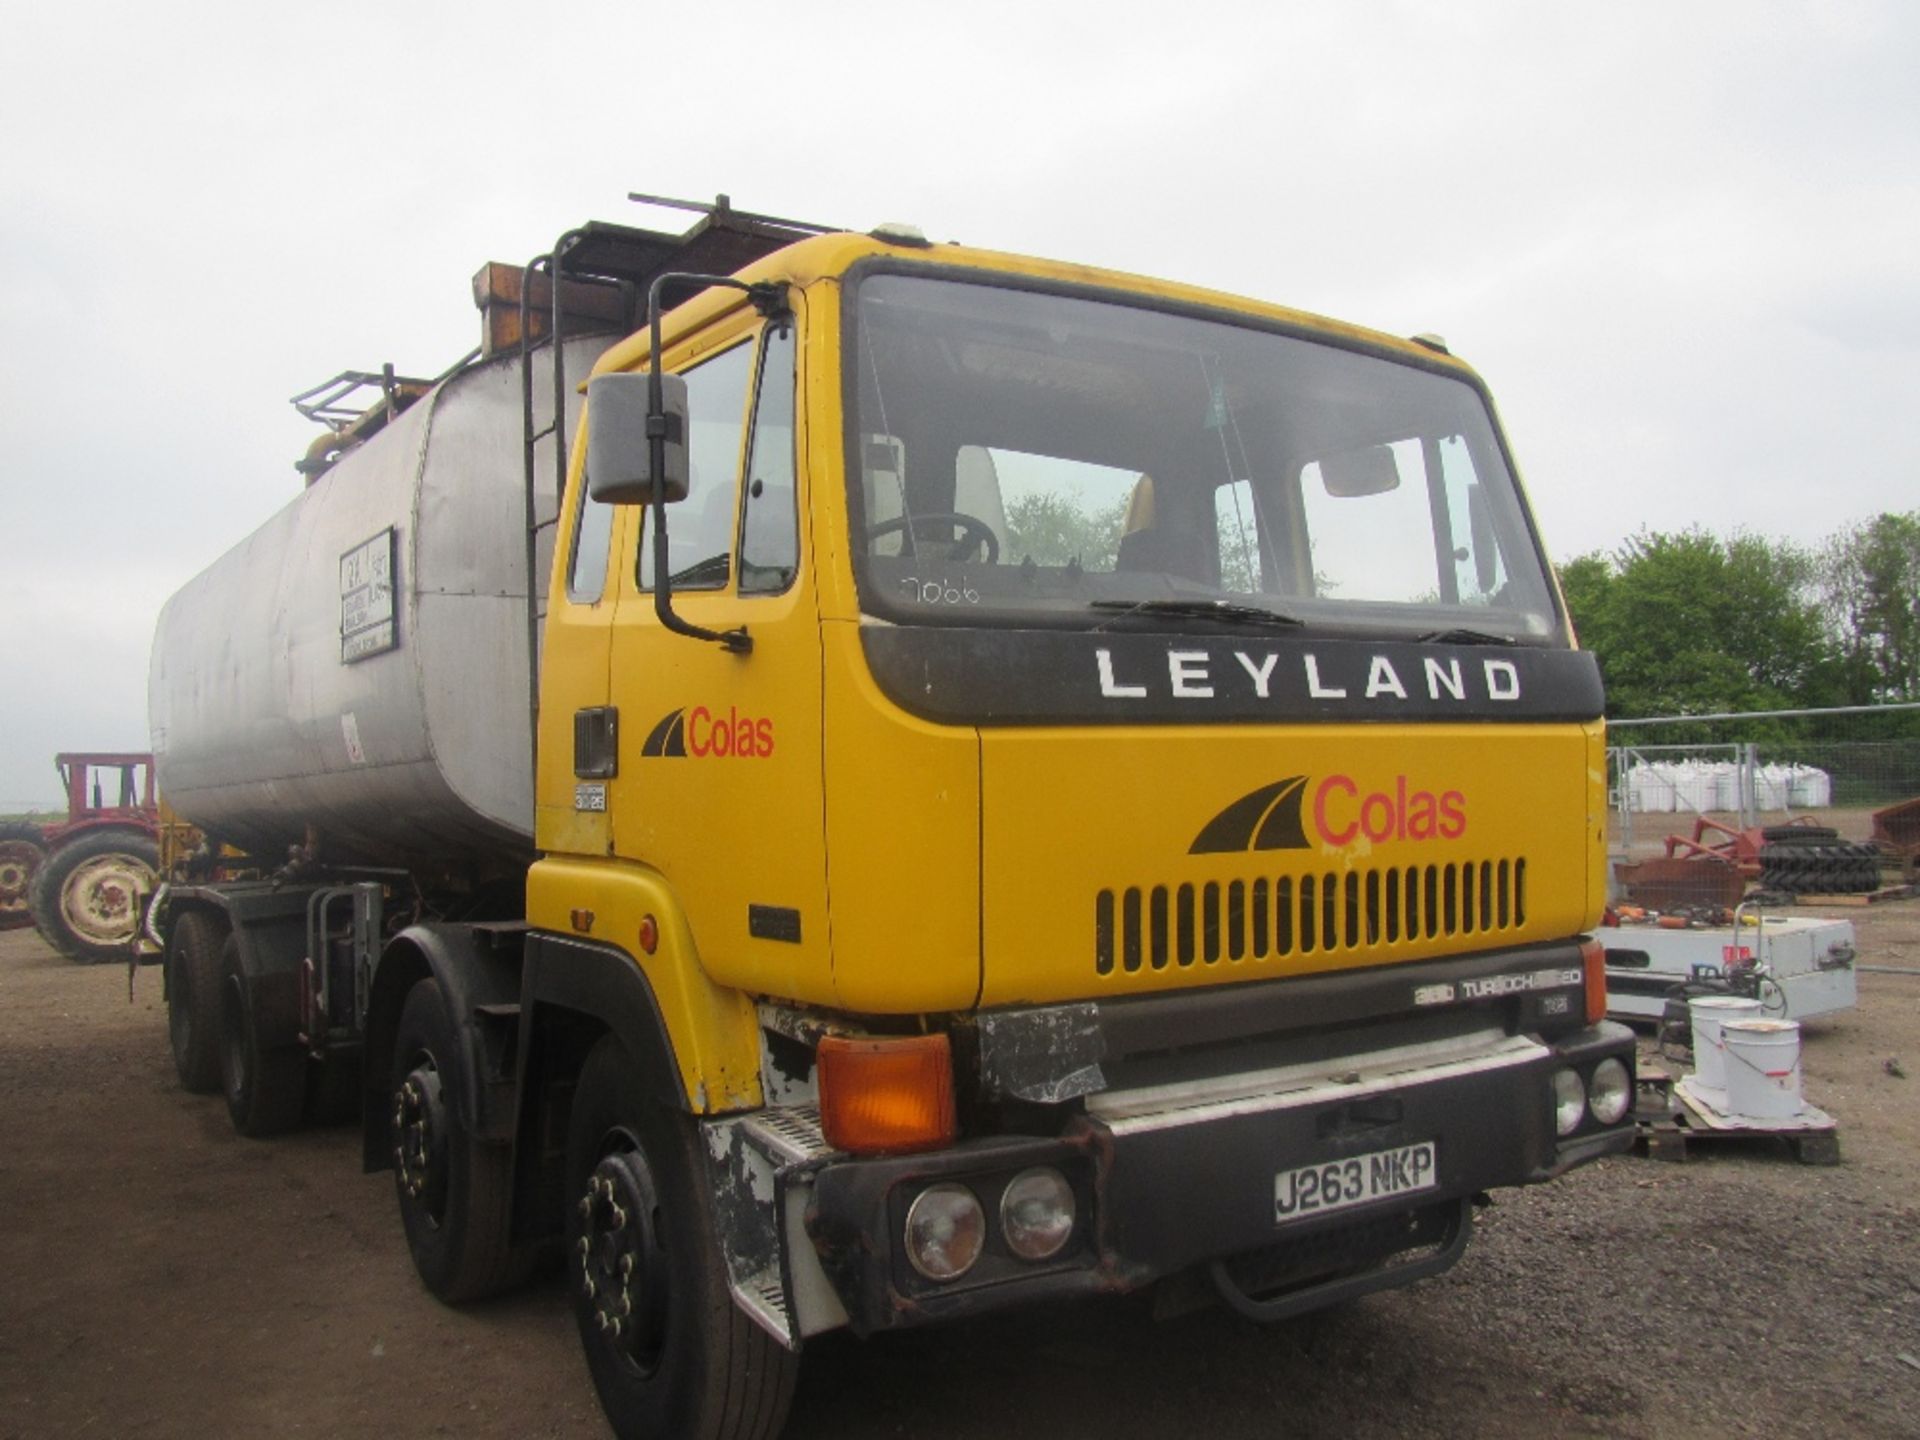 Leyland 8x4 18600 ltr Tar Sprayer c/w bitumen tank, pheonix variable width spray Reg. No. J263 NKP - Image 3 of 8